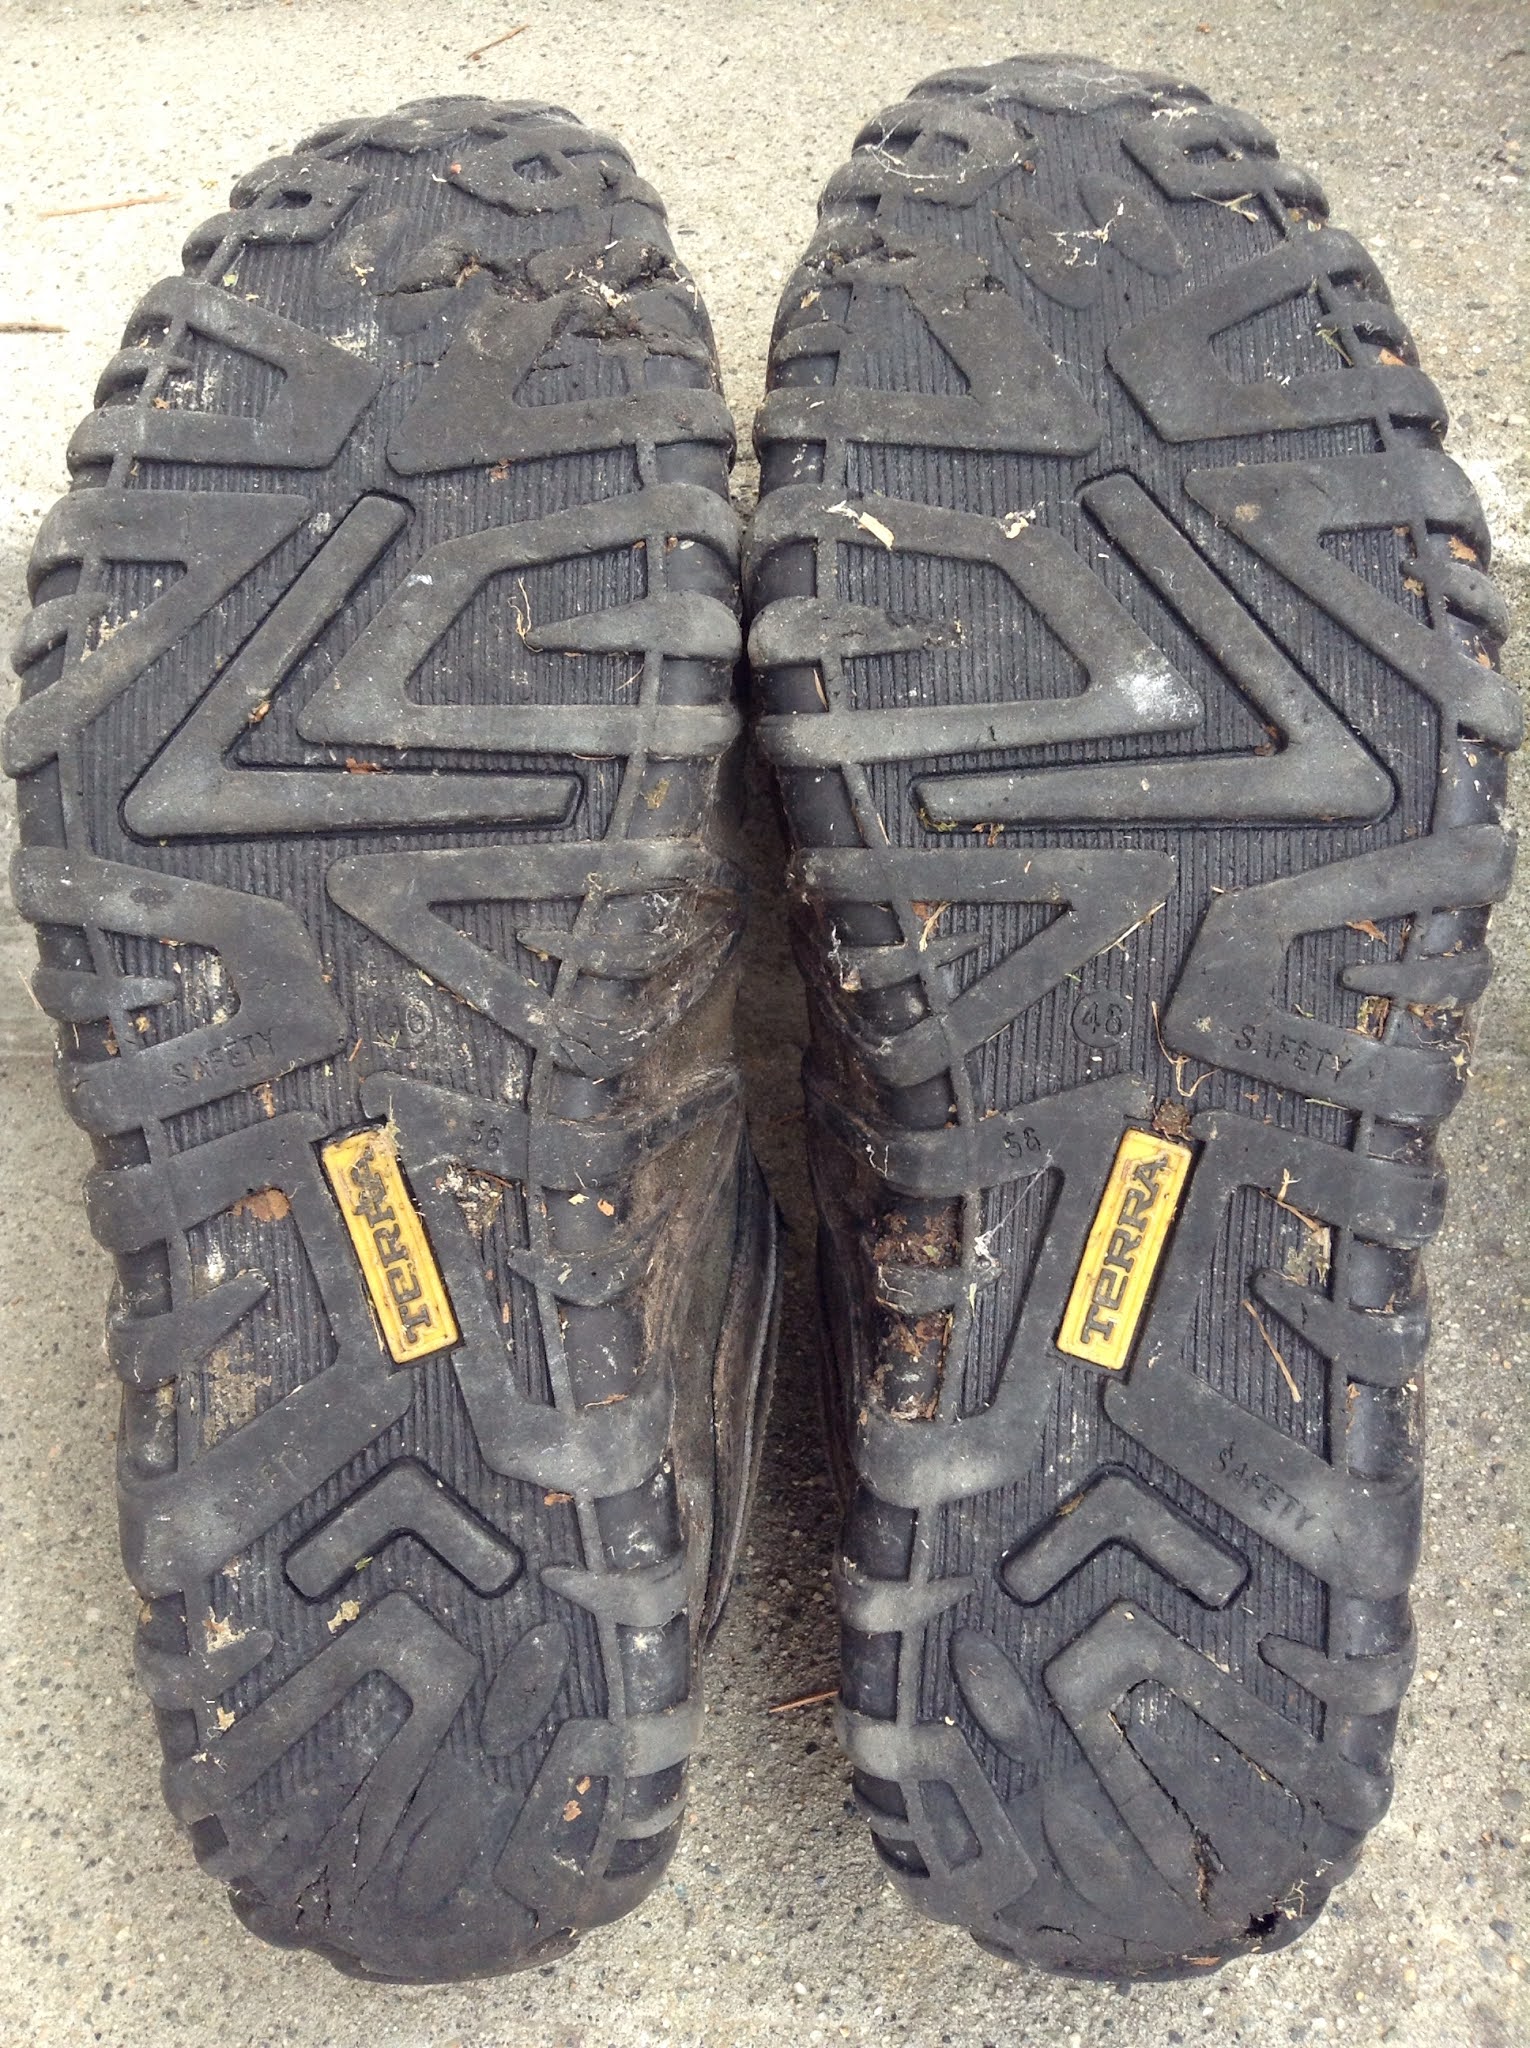 Scocasso Blog: Terra Spider X Shoes 608115 / 0A4NPYA14 Review